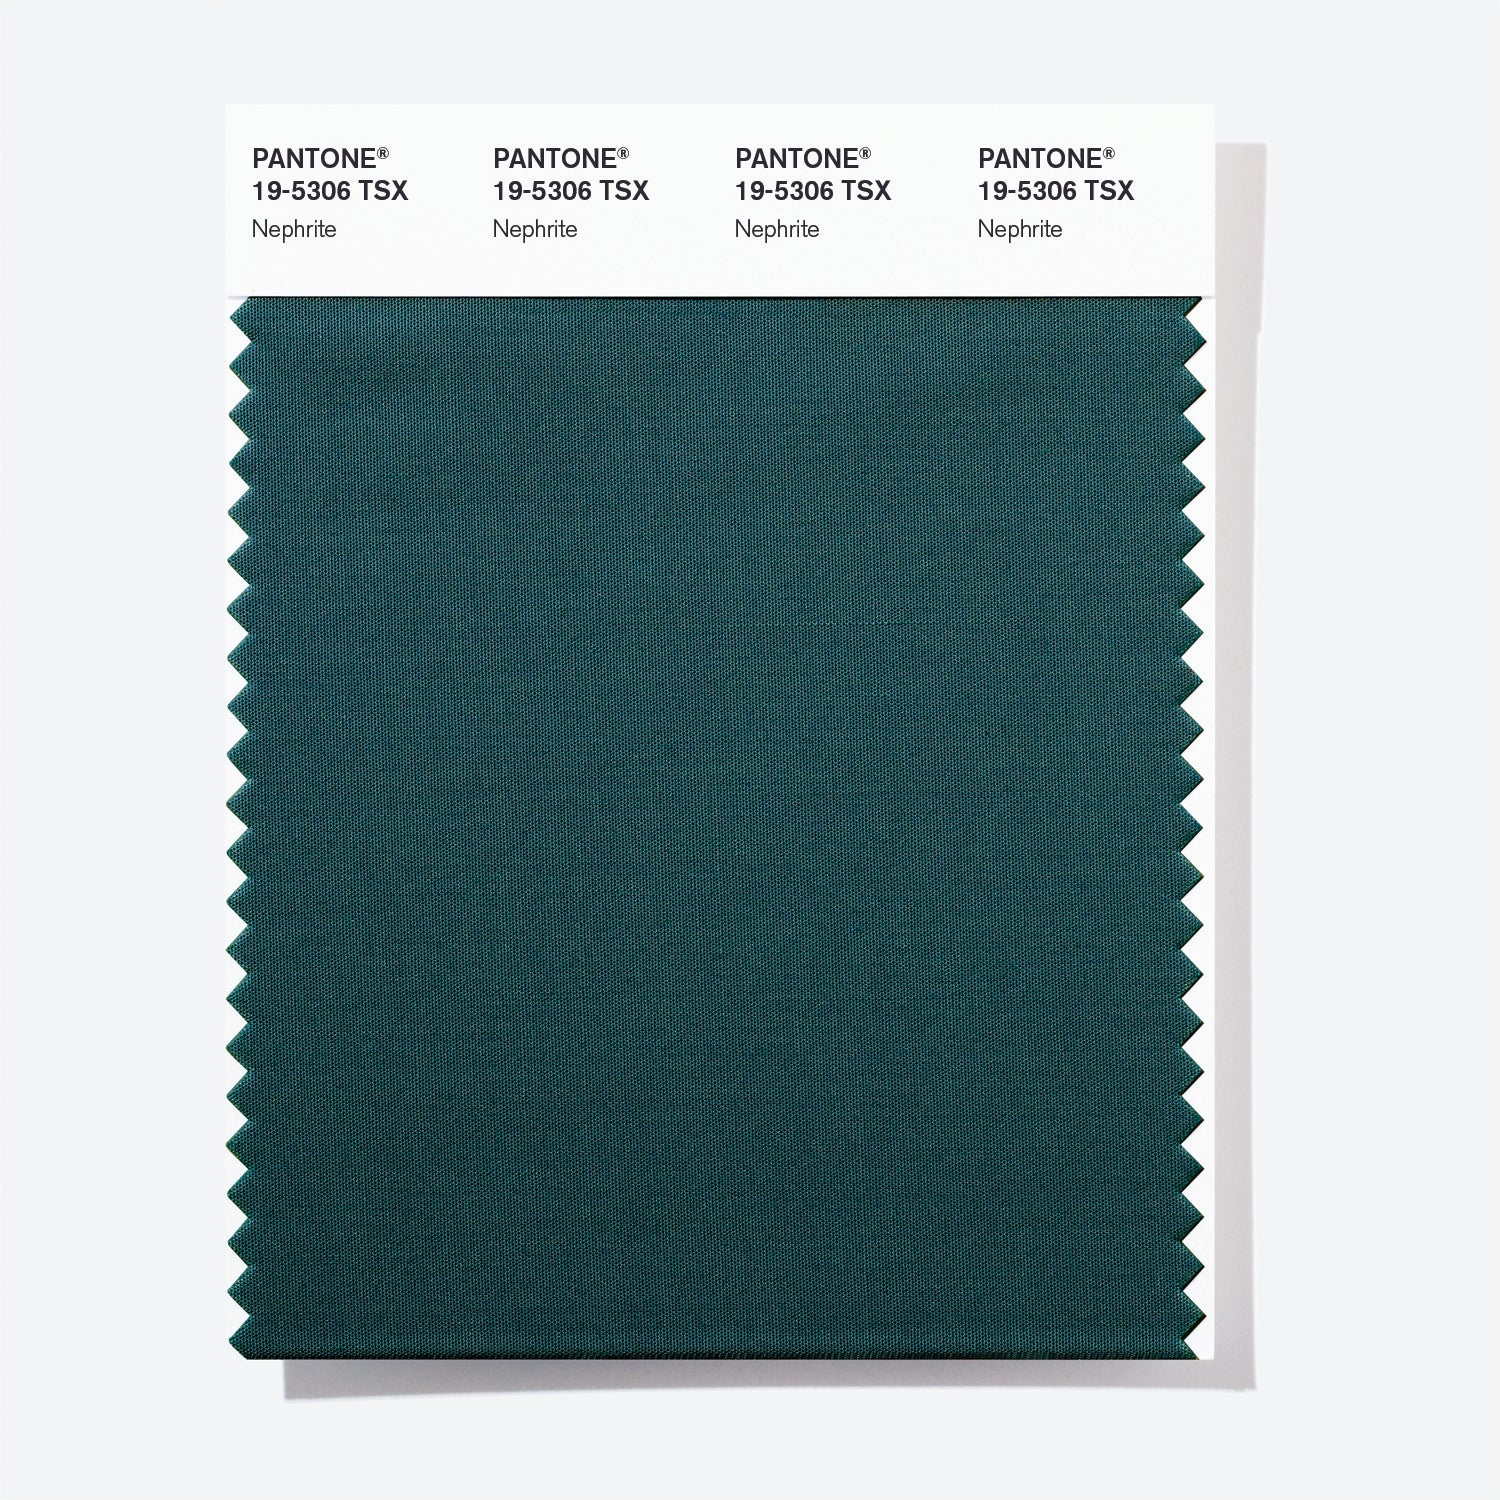 Pantone Polyester Swatch Card 19-5306 TSX (Nephrite)